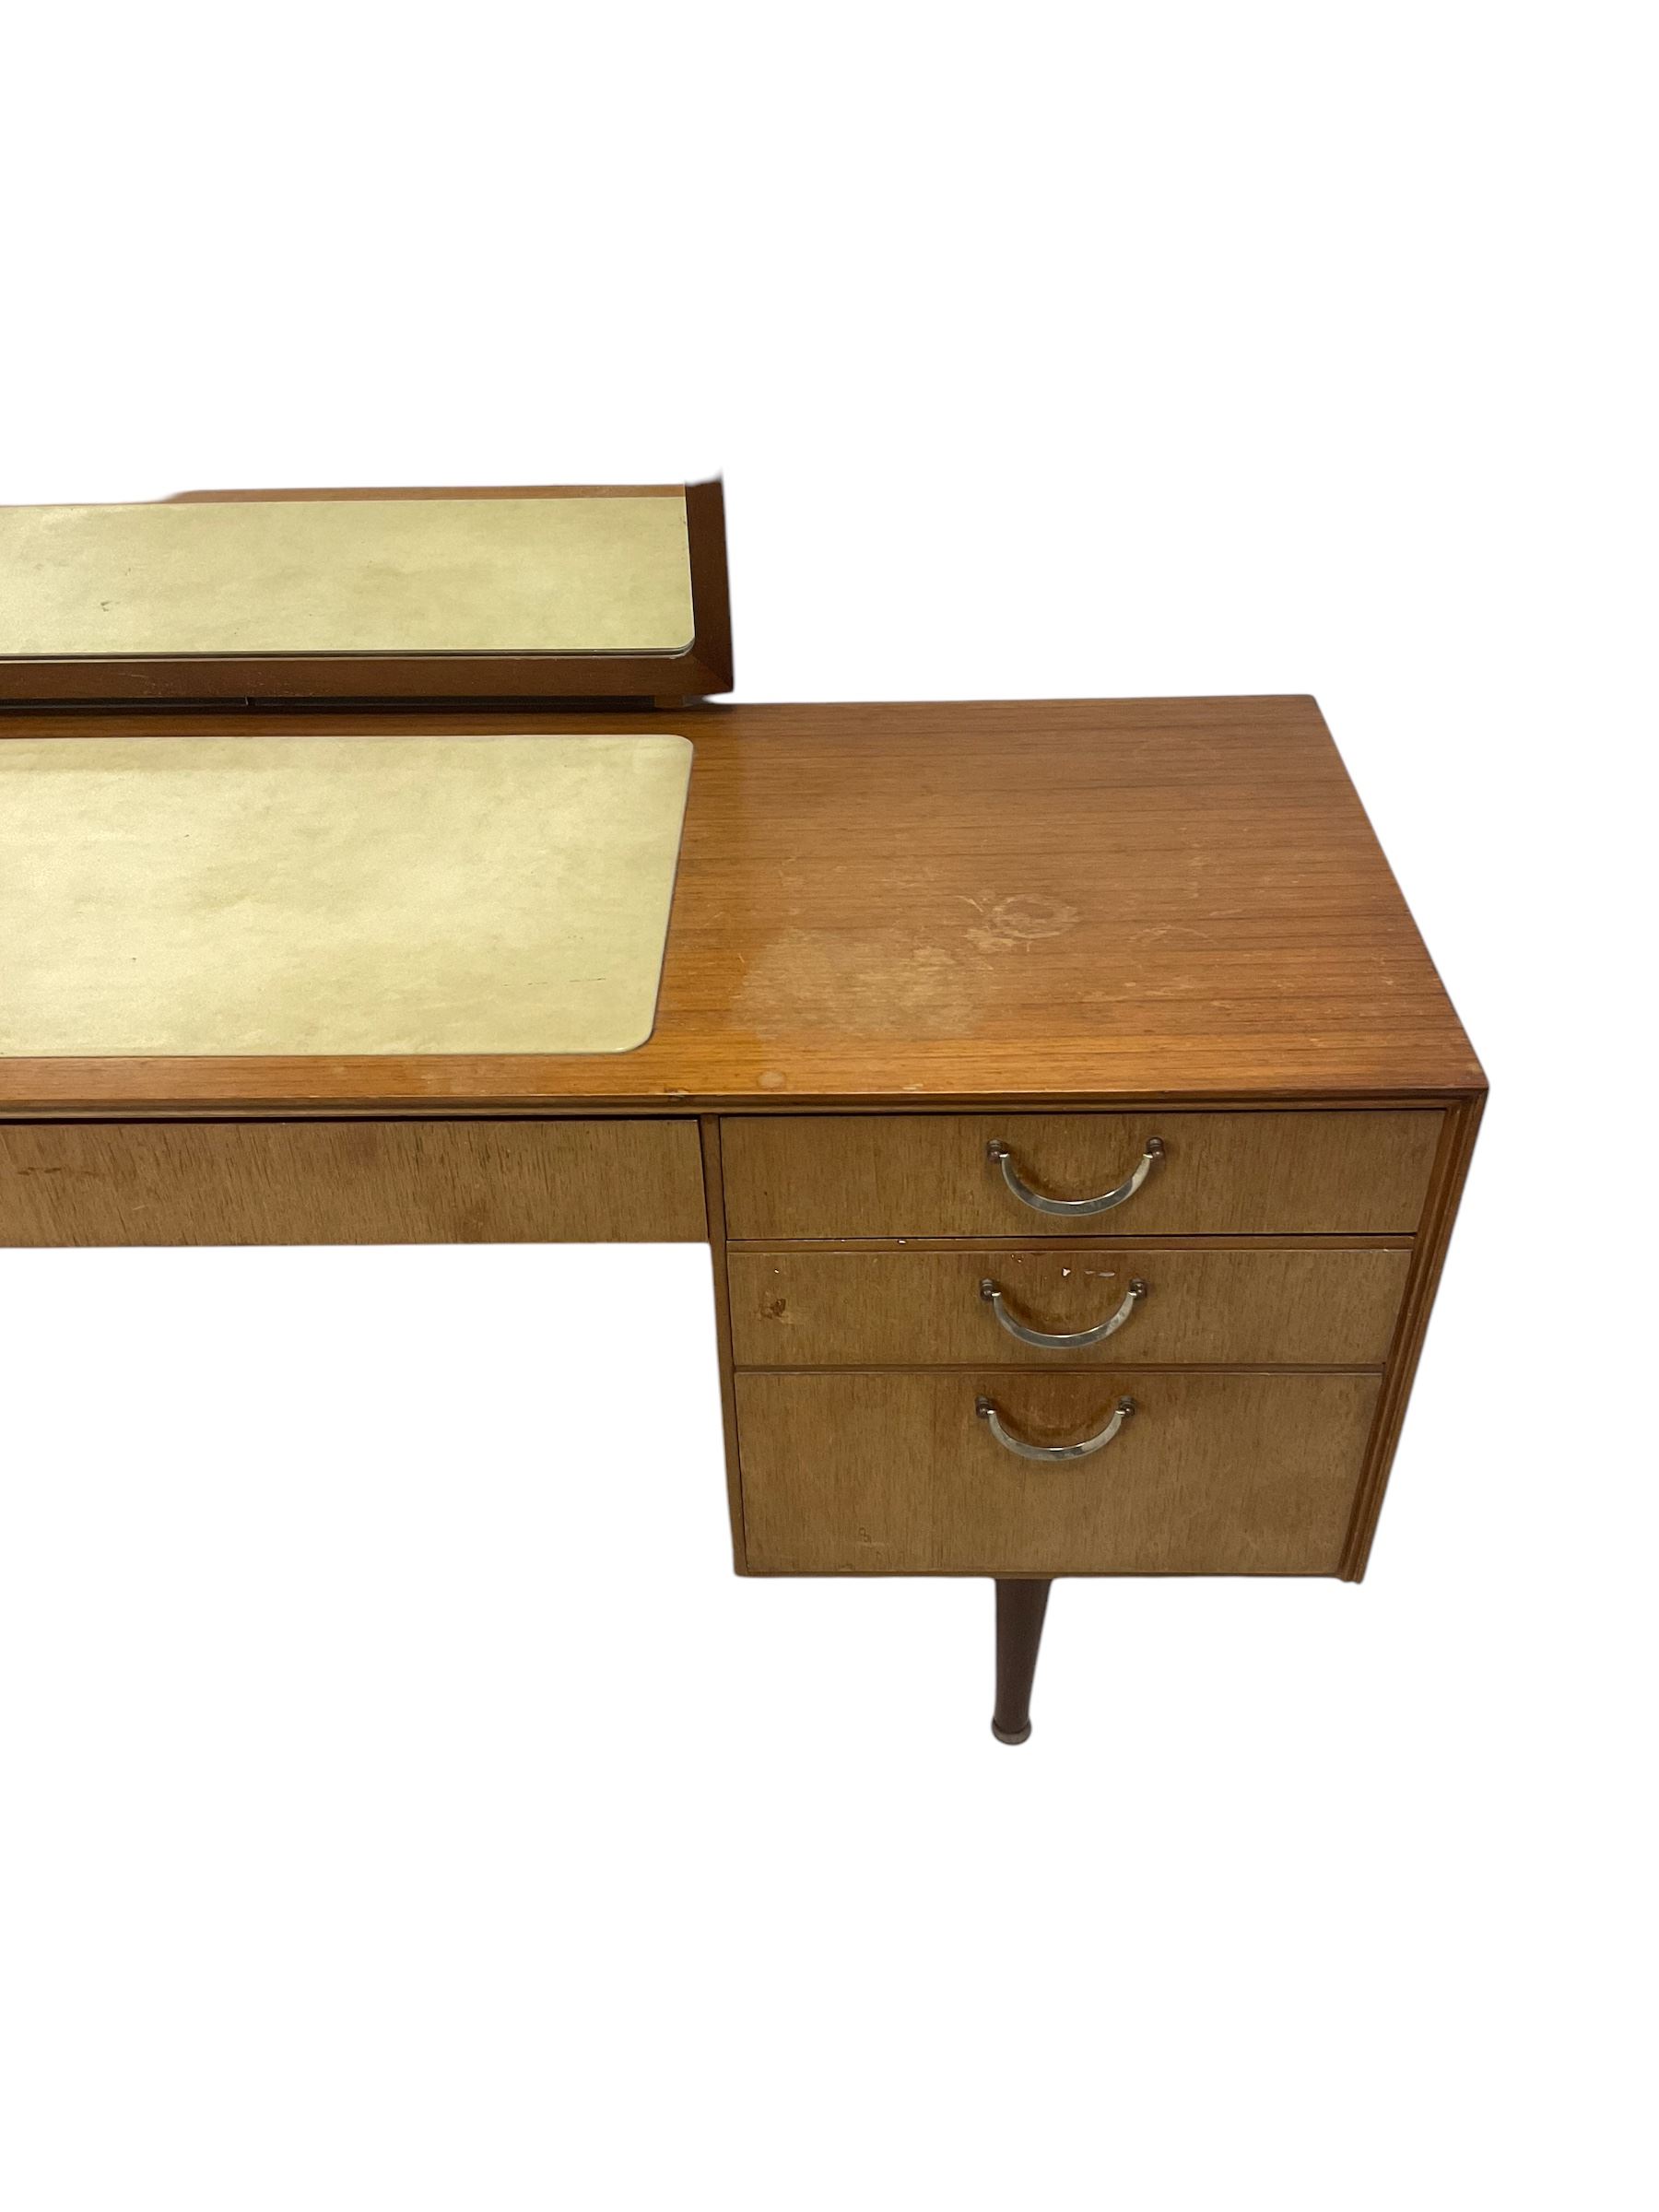 Meredew - mid-20th century teak dressing table - Image 7 of 14